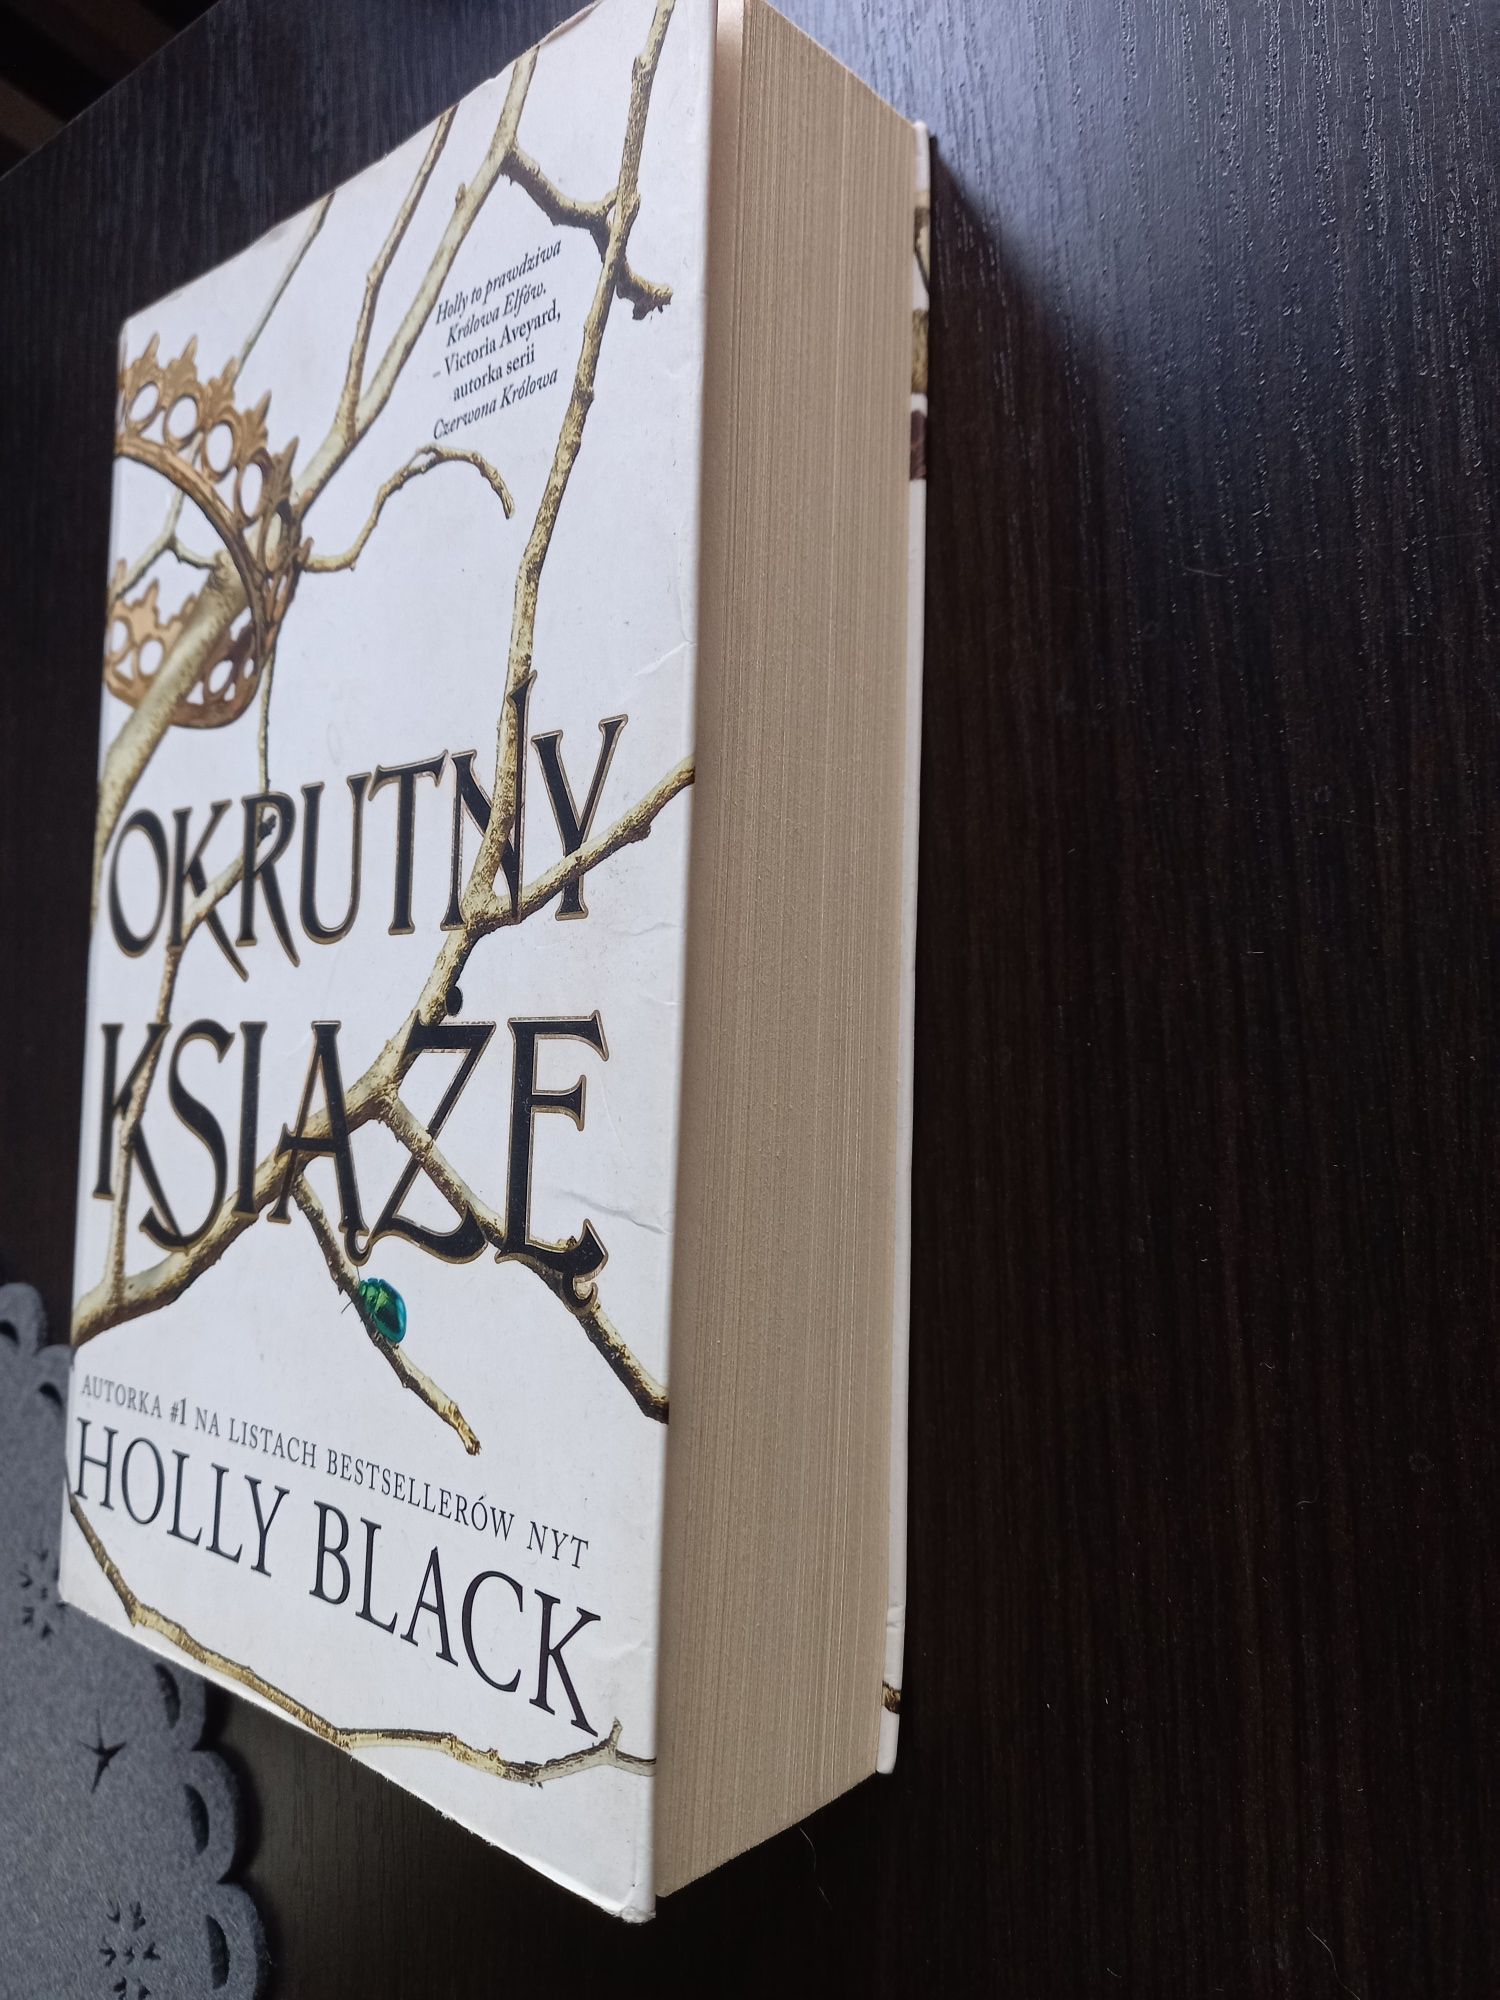 Książka "Okrutny książę " Holly Black